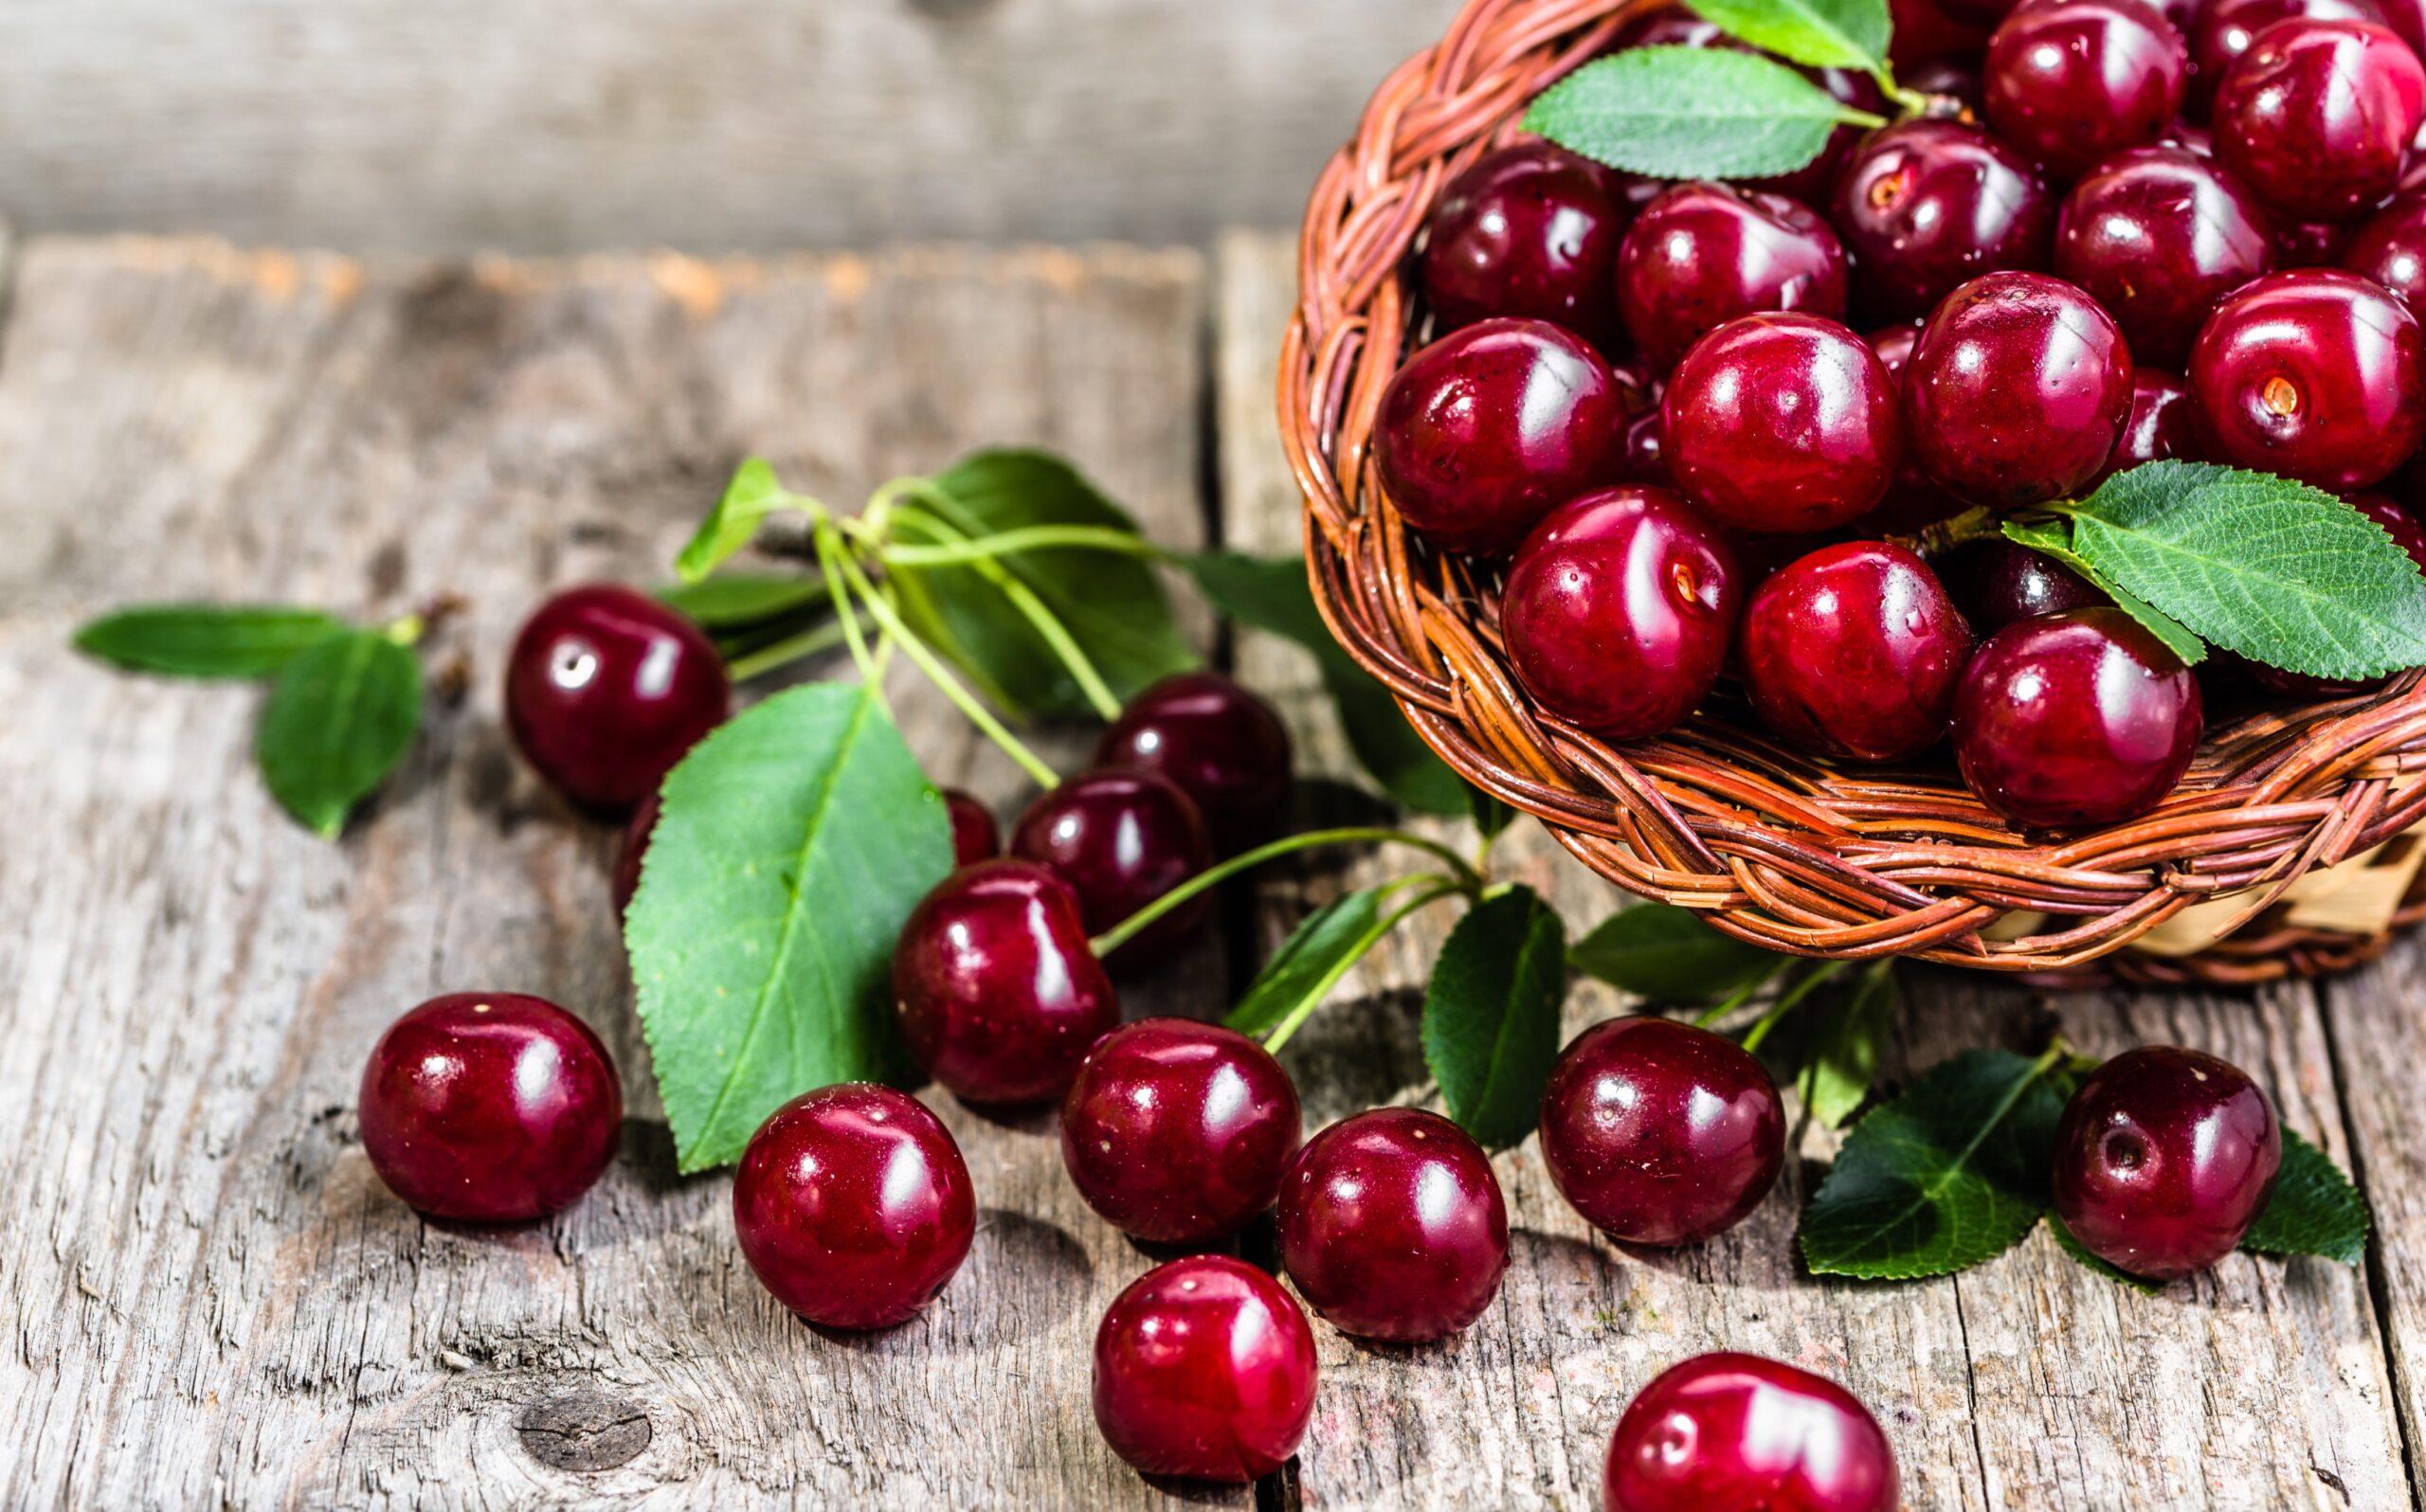 Cherries May Help to Improve Sleep And Boost Heart Health